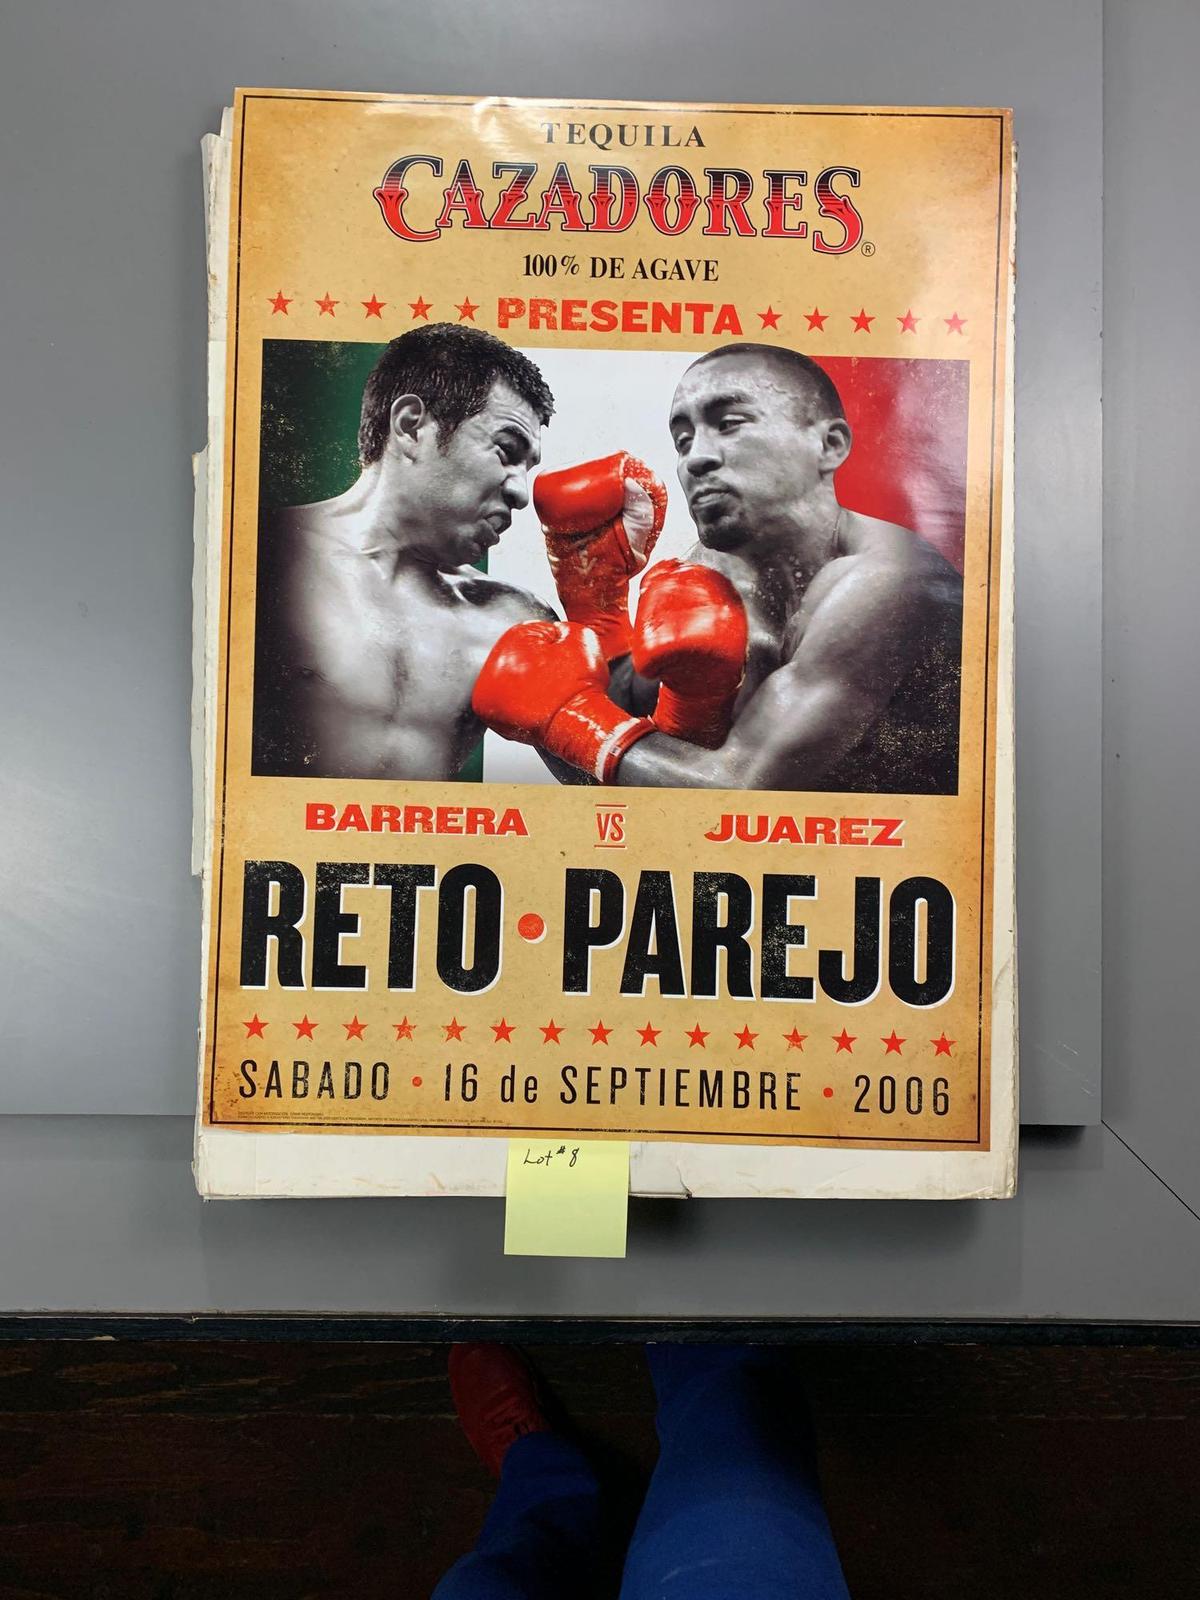 Unopened Case of Reto-Parejo 2006 Cazadorez Promotional Posters